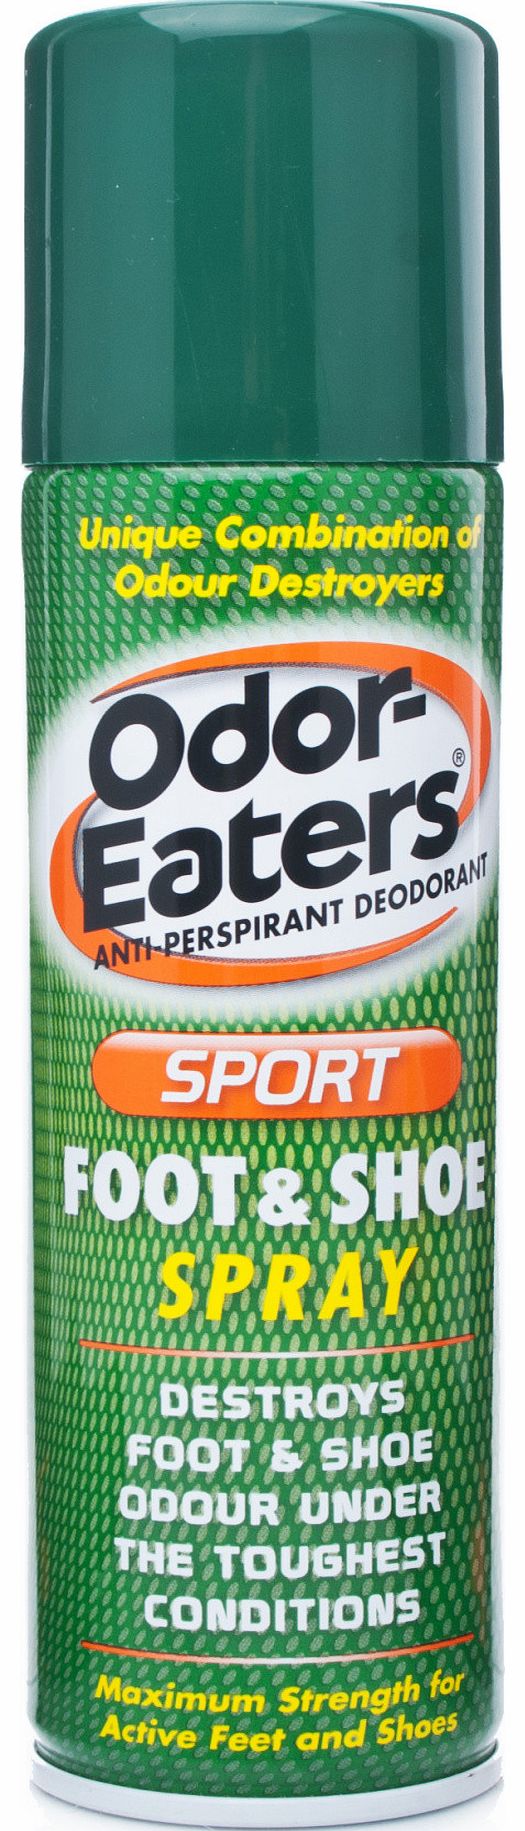 Odor-eaters Sport Foot & Shoe Spray